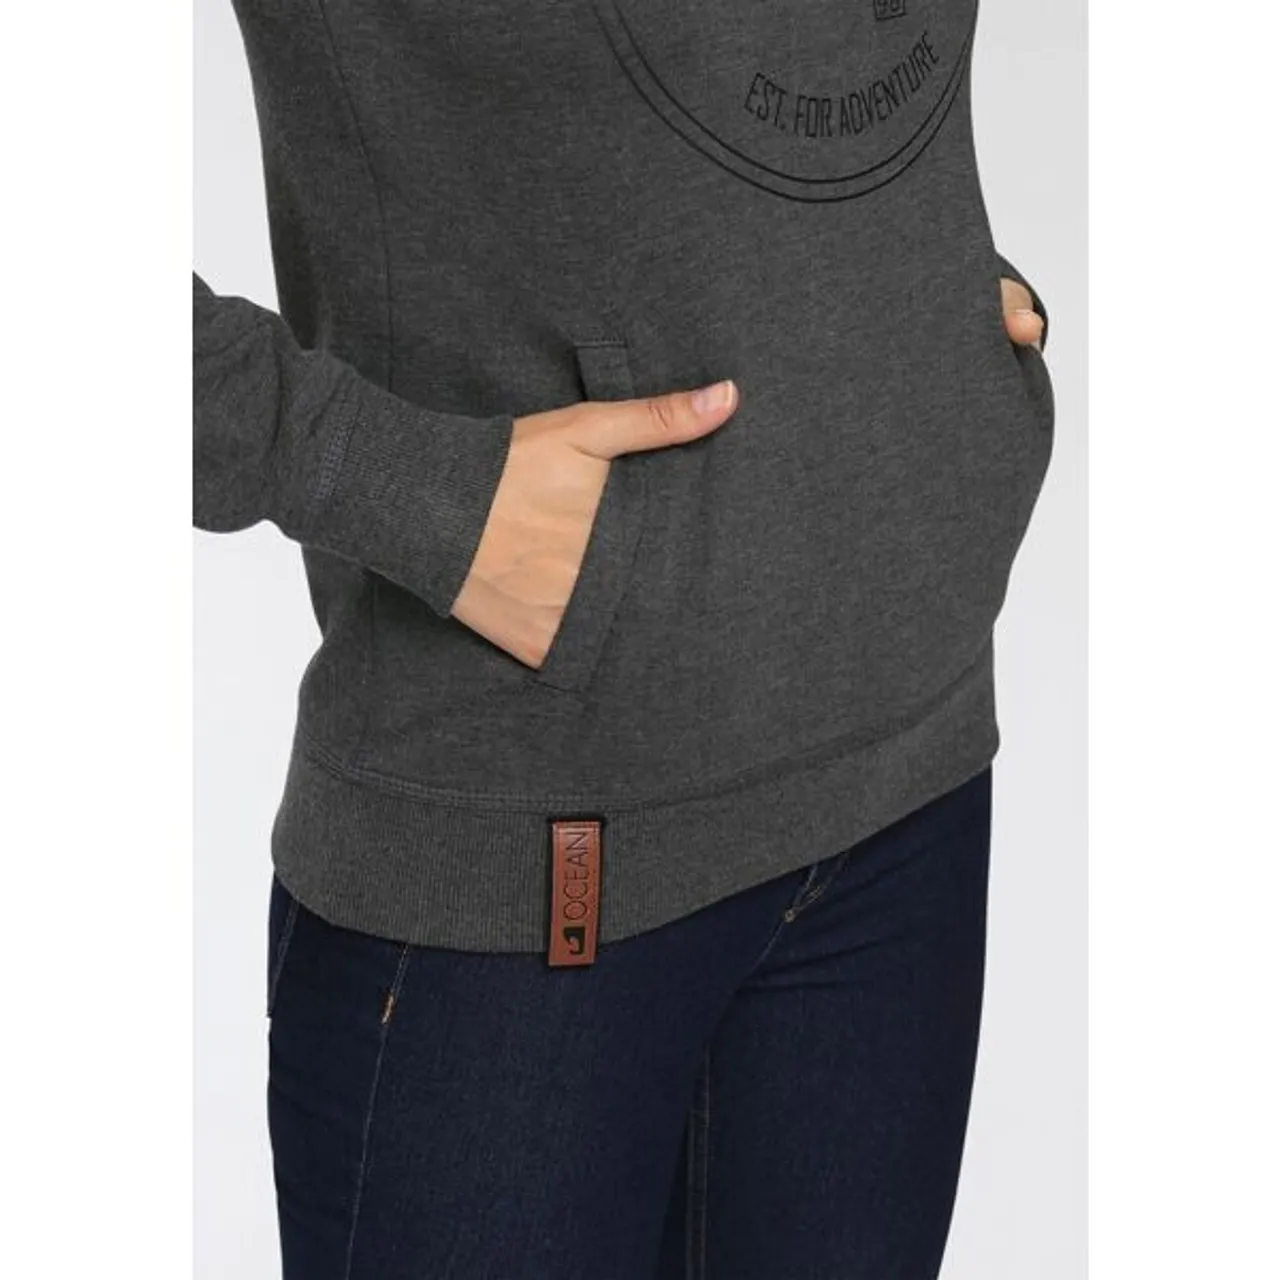 Kapuzensweatshirt OCEAN SPORTSWEAR "Essentials Sweatshirt" Gr. 32/34, grau (anthrazit) Damen Sweatshirts